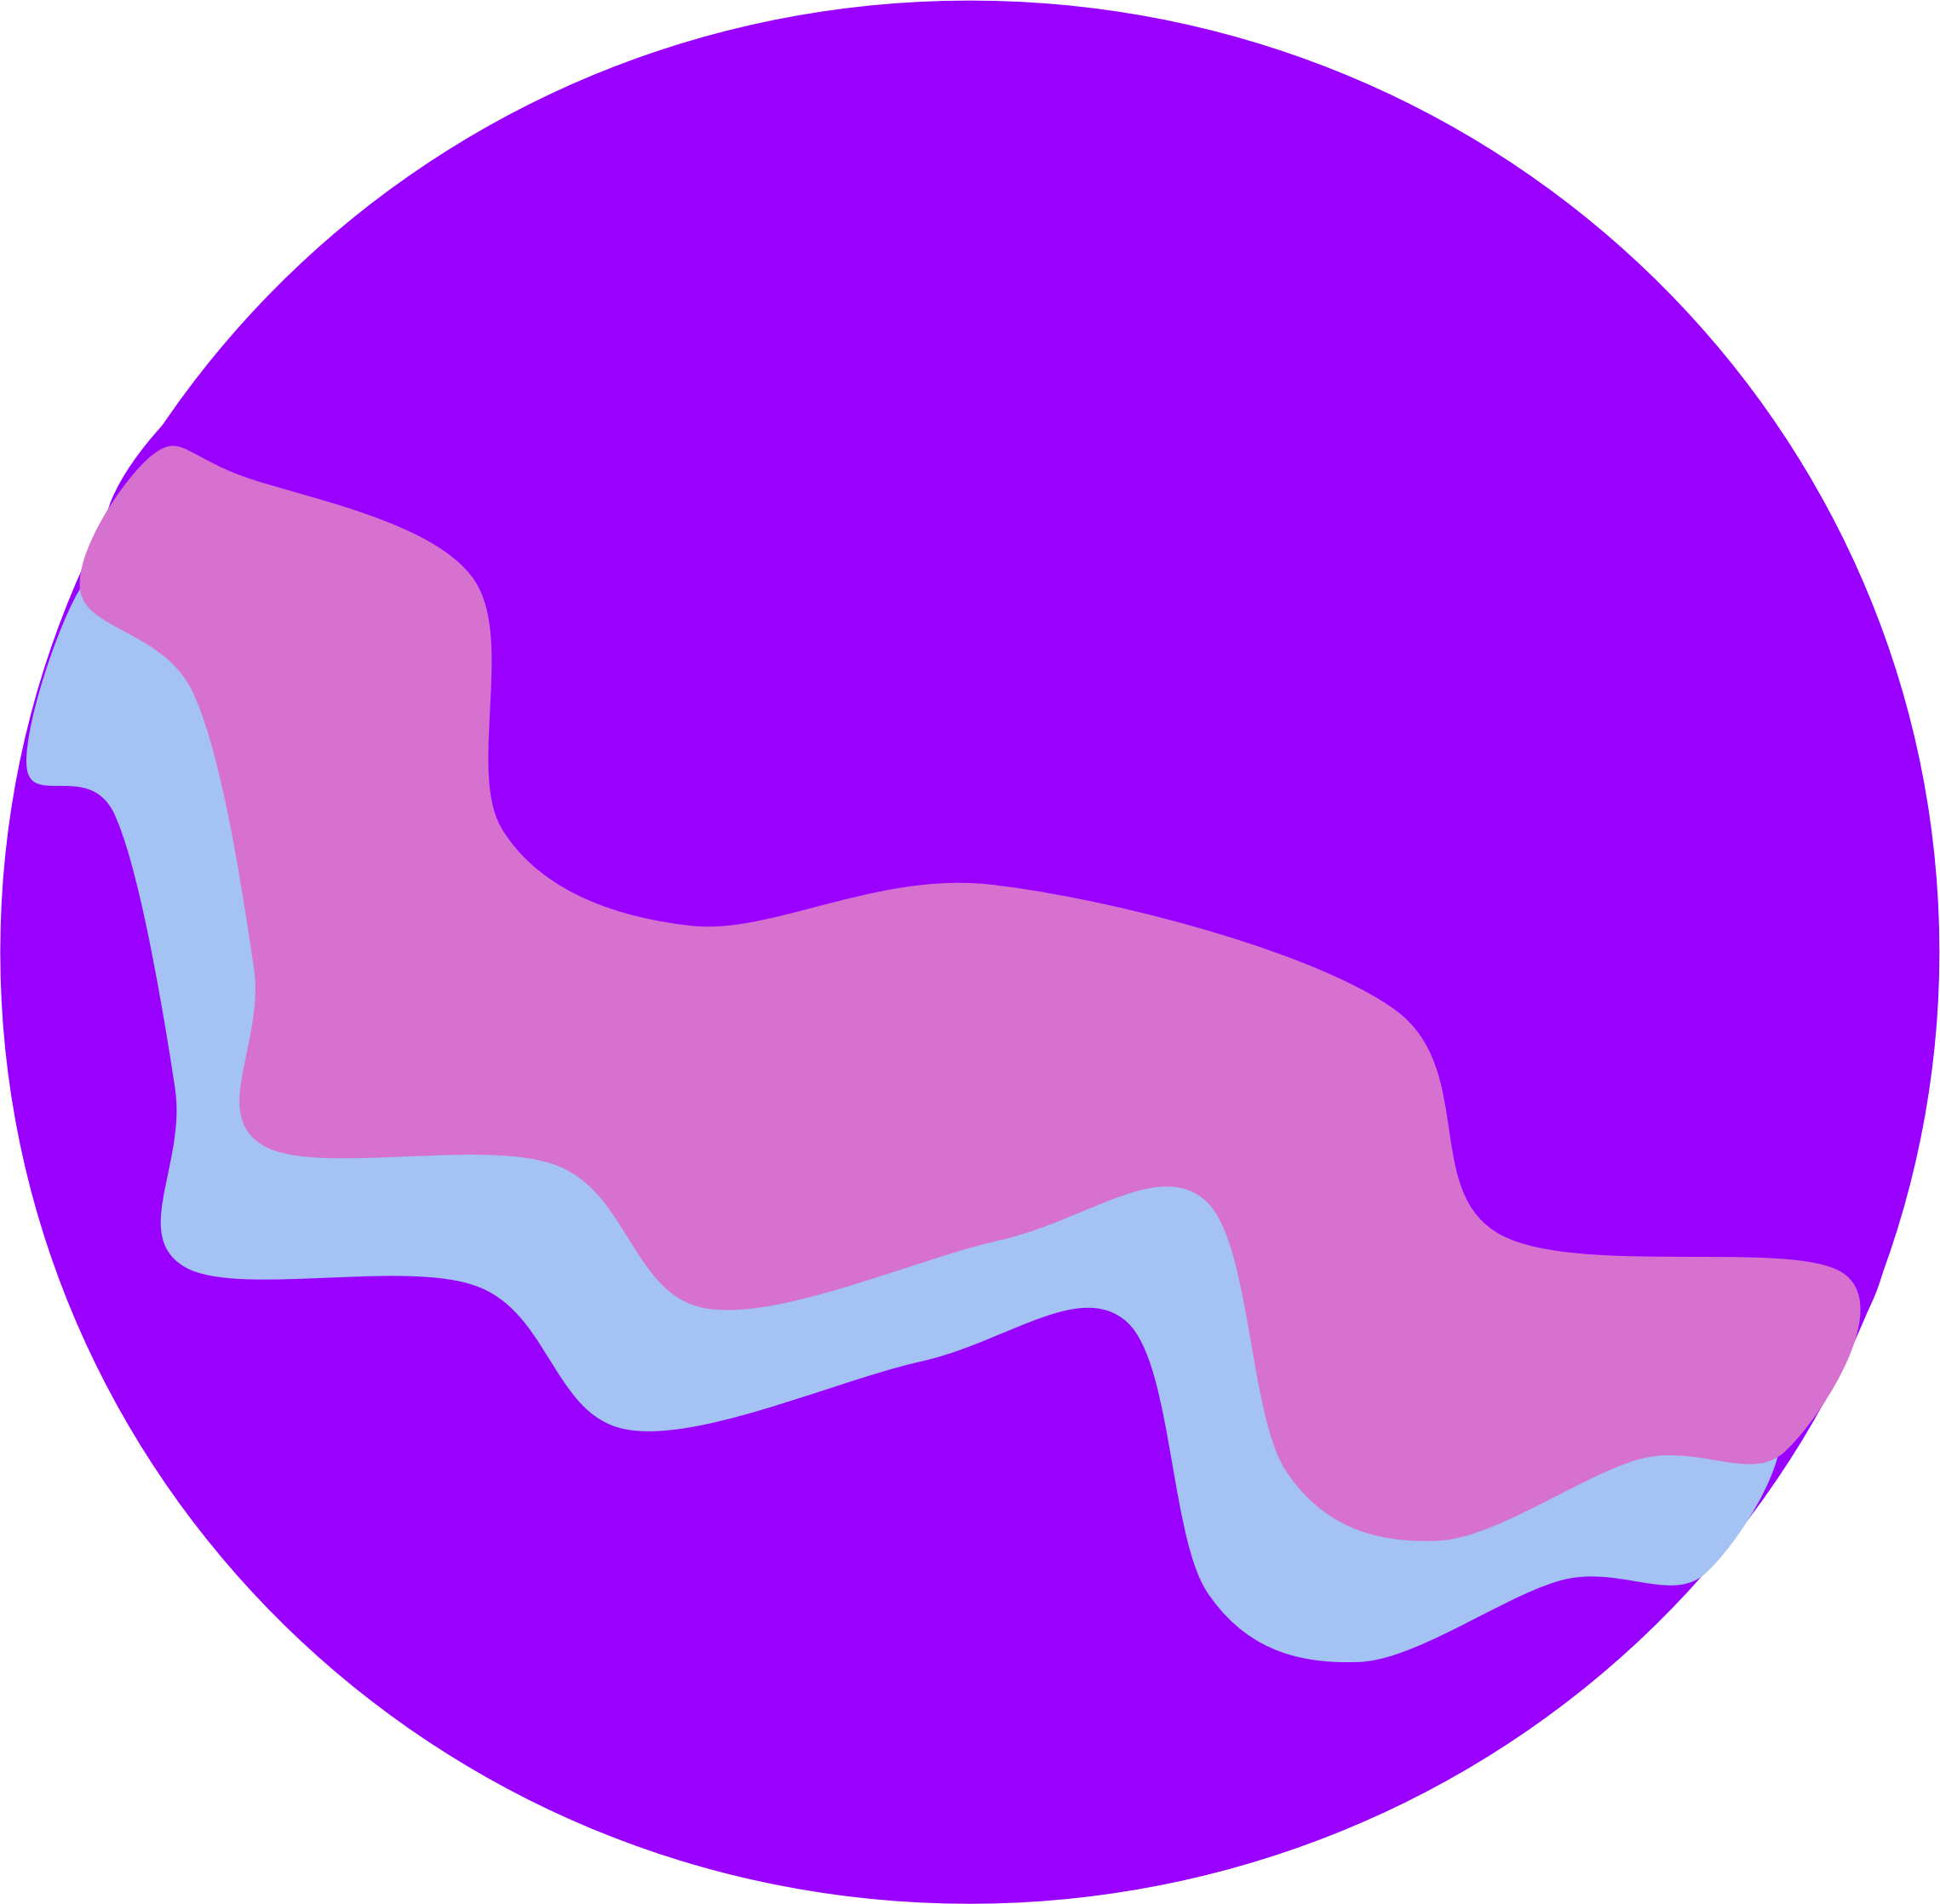 Abstract Purple Planet Illustration